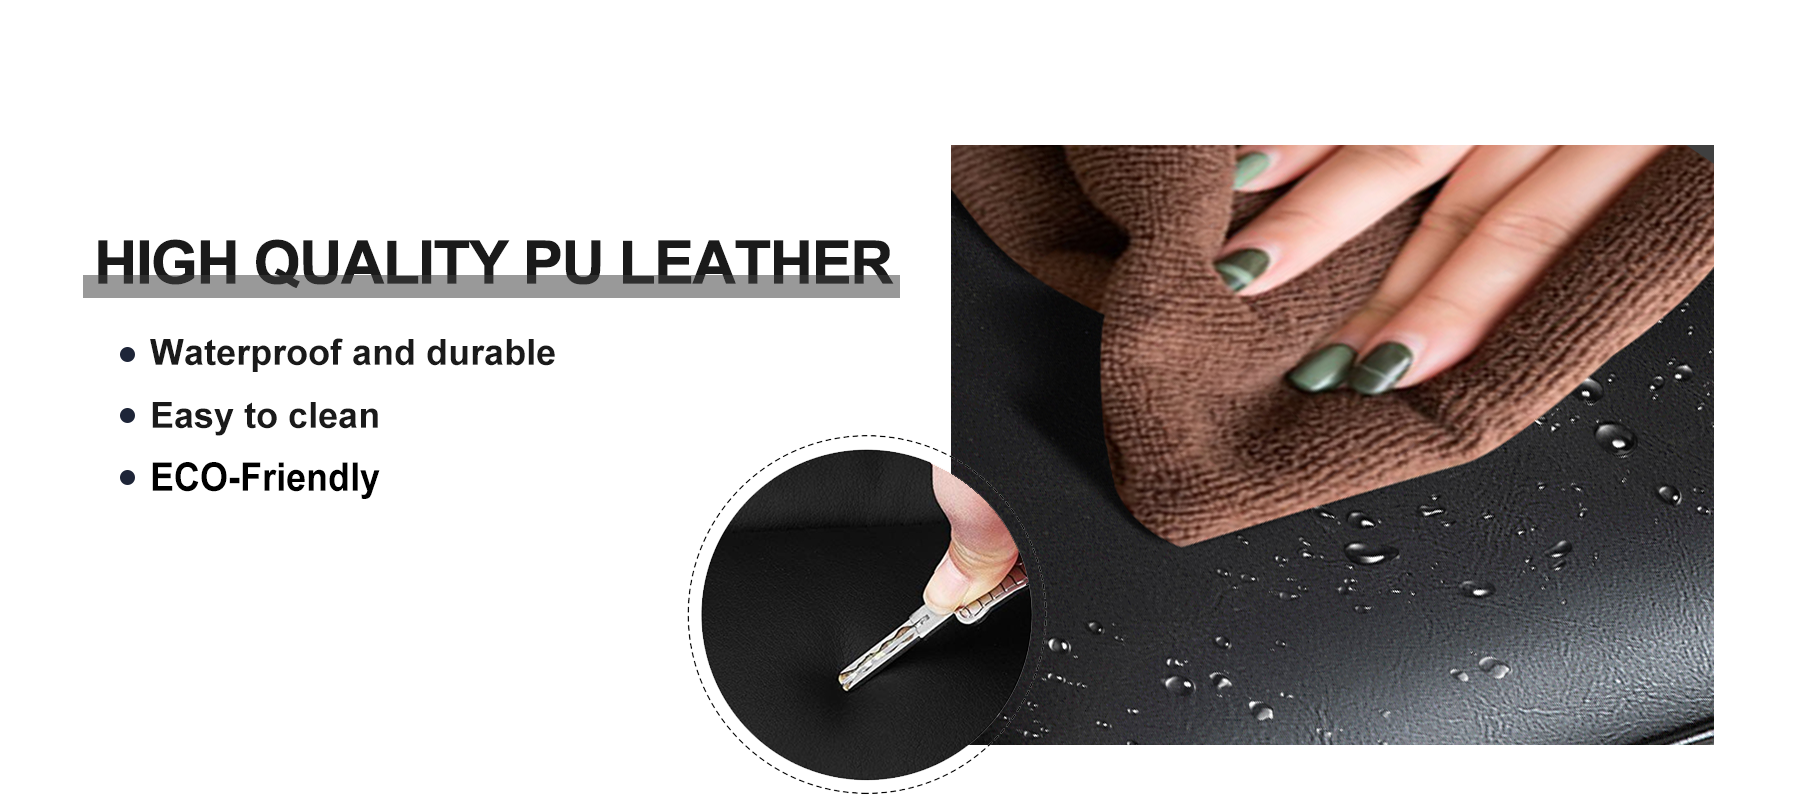 High quality pu leather